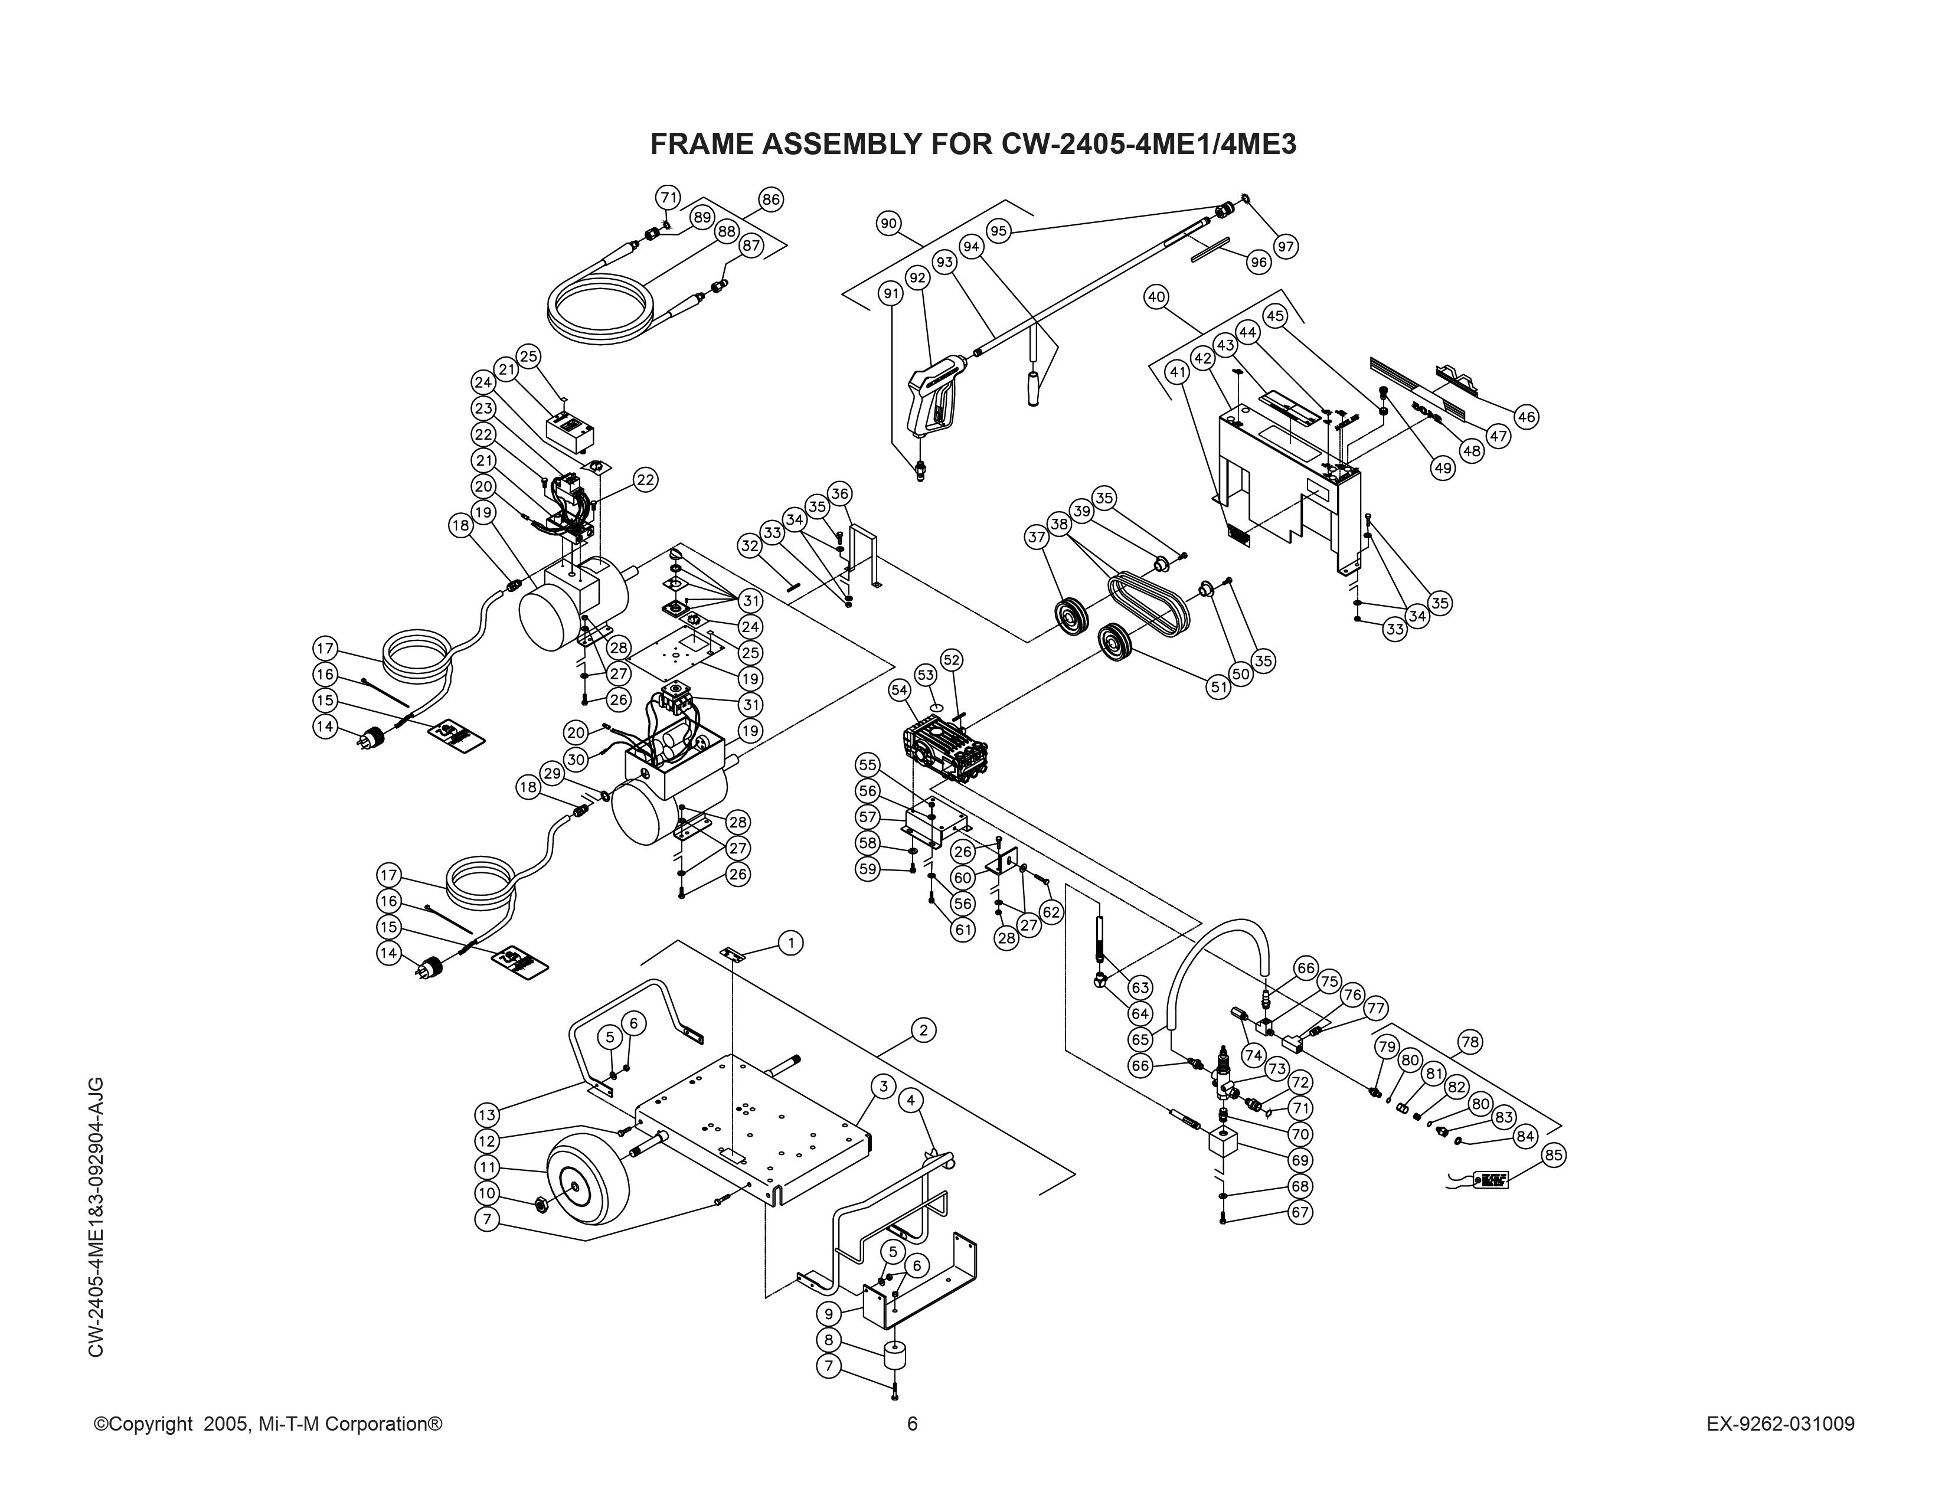 CW-2405-4ME1 Pressure Washer Parts, Pumps, Breakdons & Manuals